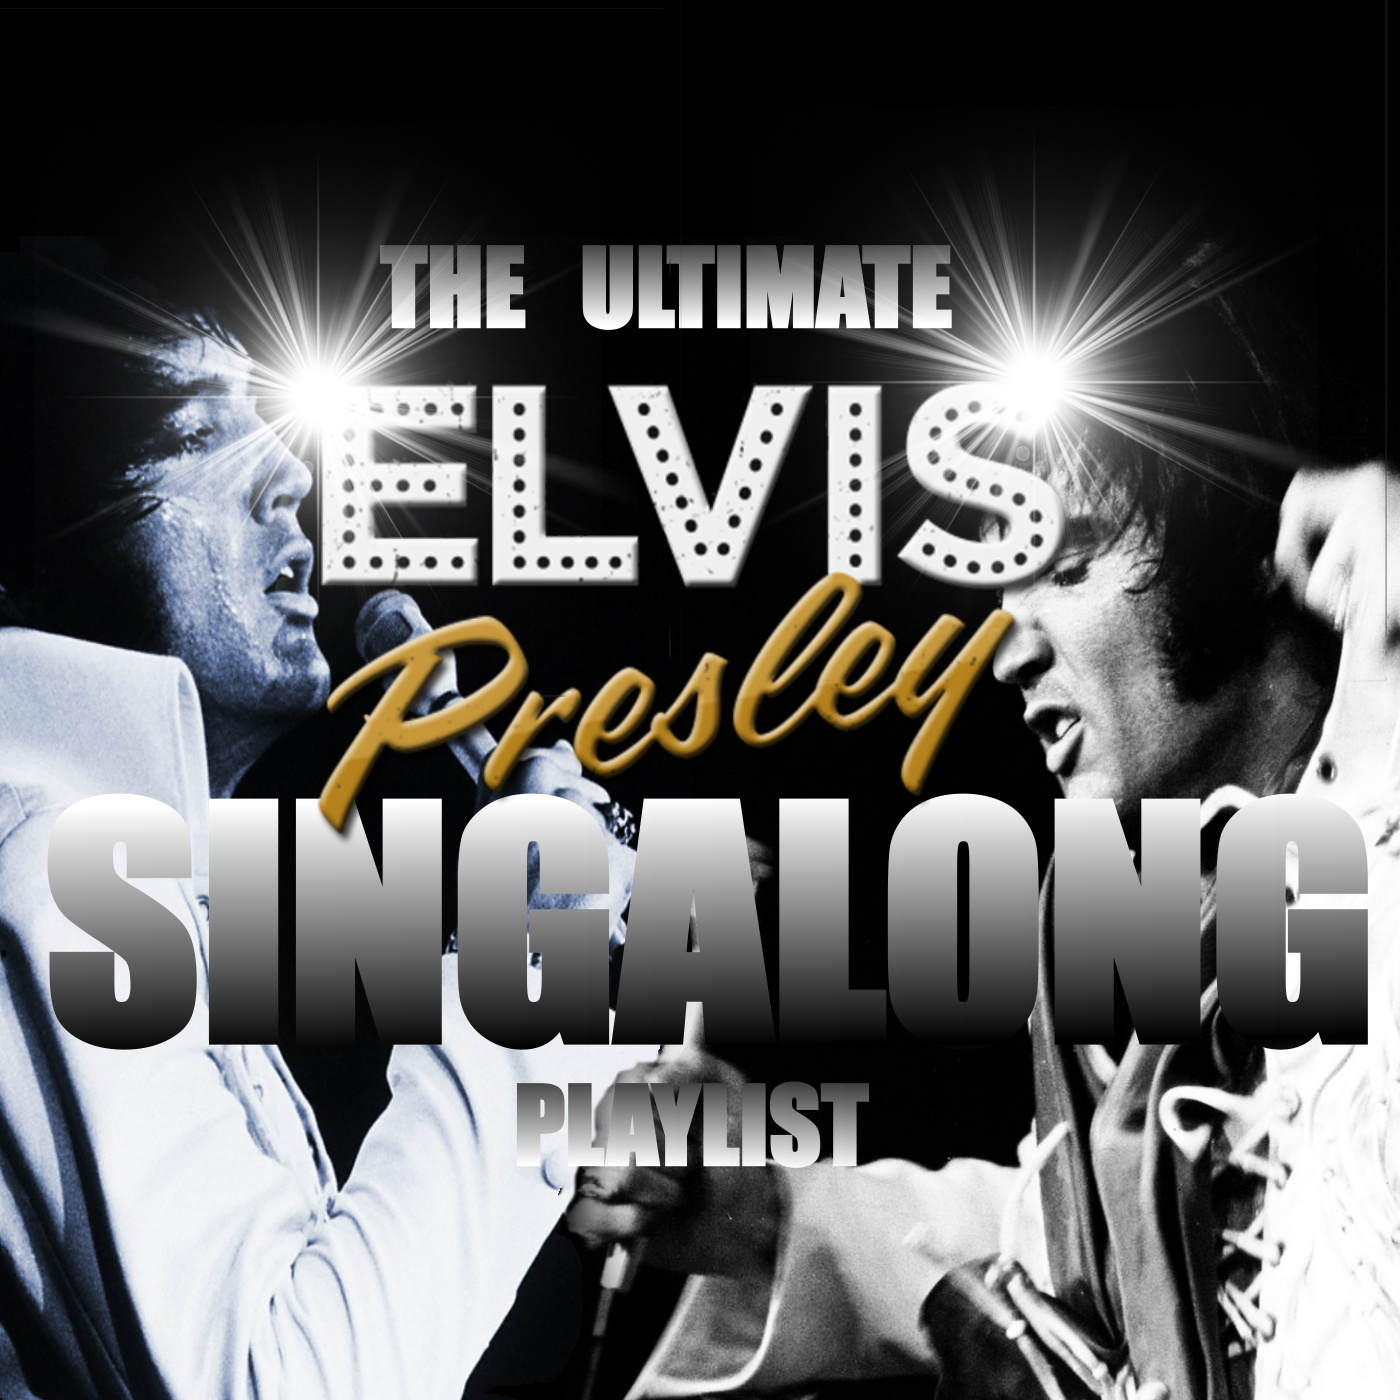 The Ultimate Elvis Presley Singalong Playlist